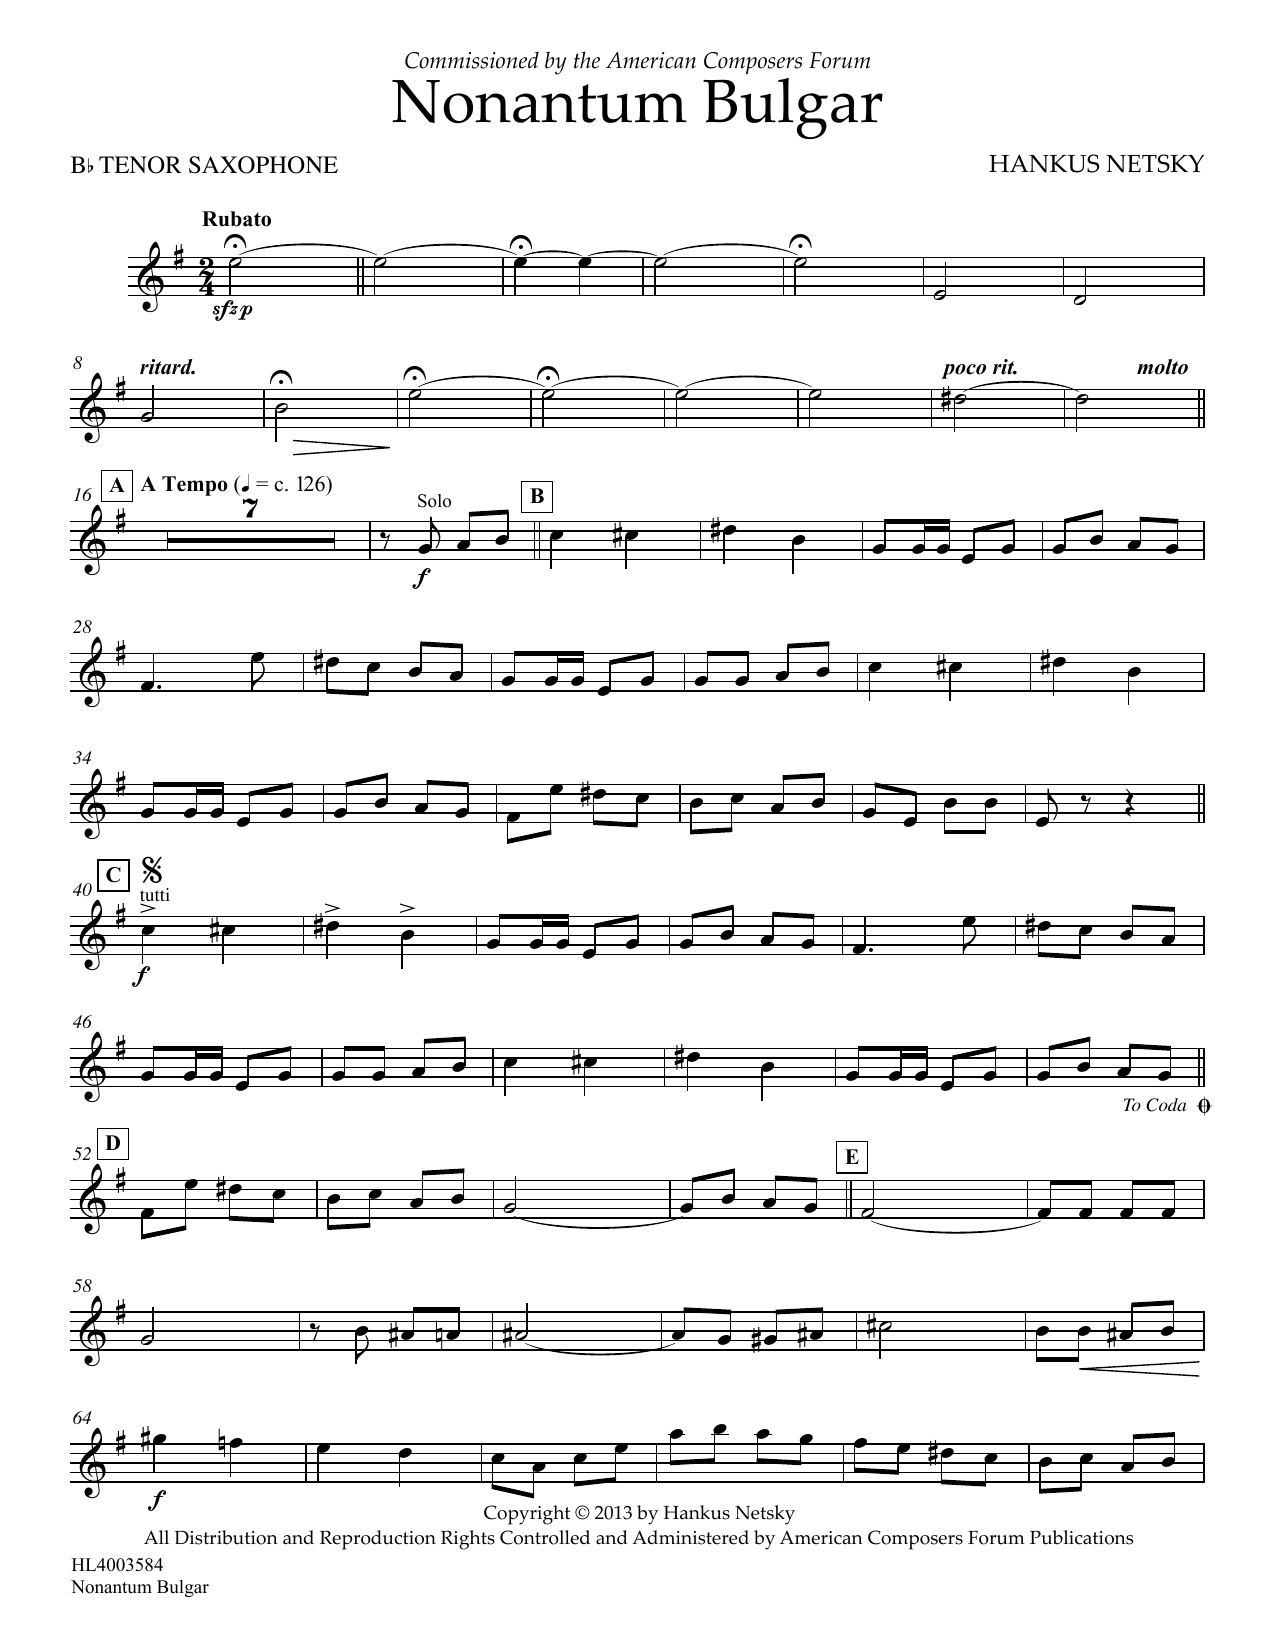 Hankus Netsky Nonantum Bulgar - Bb Tenor Saxophone Sheet Music Notes & Chords for Concert Band - Download or Print PDF